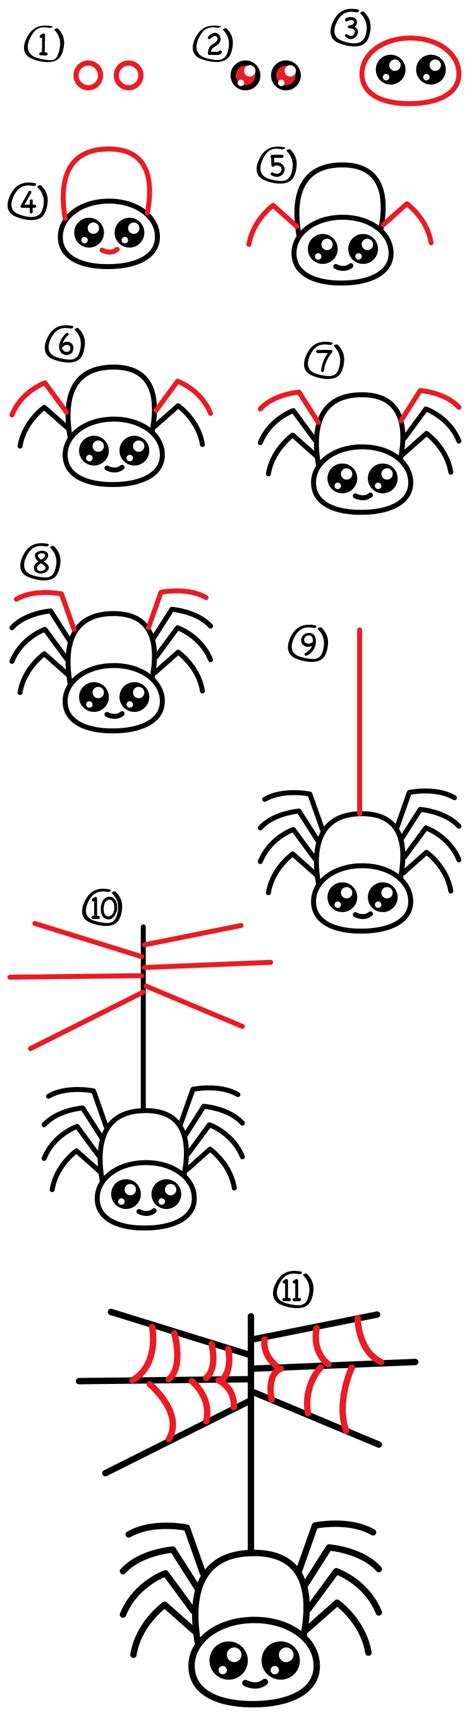 Https://tommynaija.com/draw/how To Draw A Cartoon Spider